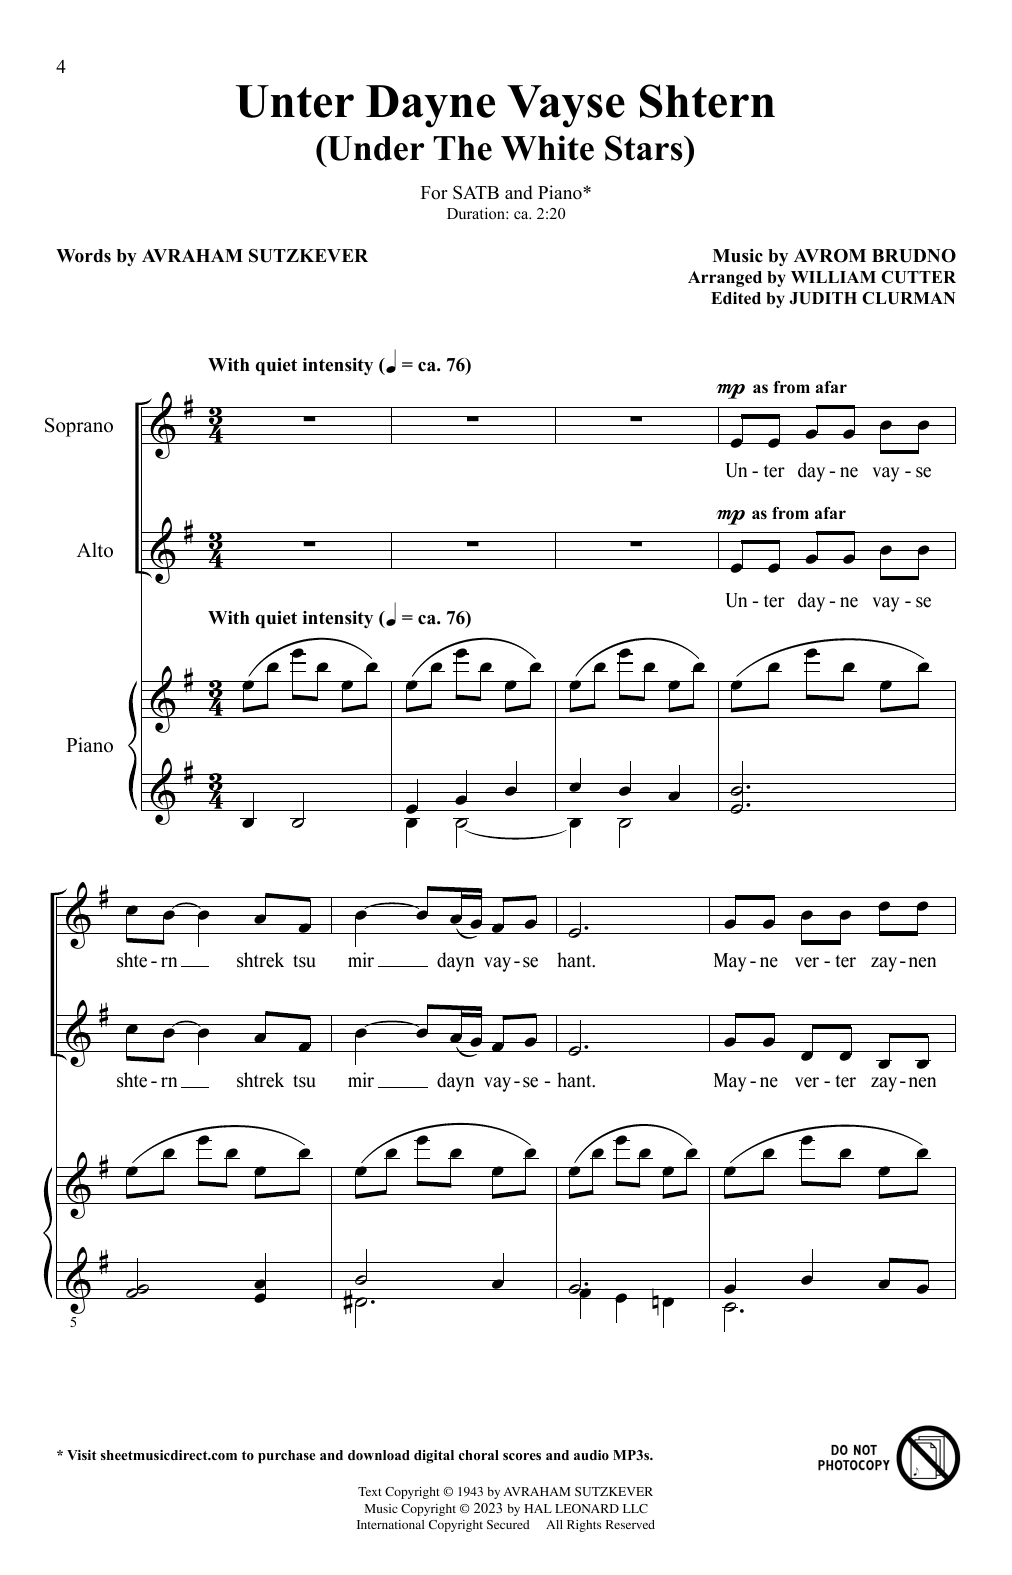 Avrom Brudno Unter Dayne Vayse Shtern (Under Your White Stars) (arr. Bill Cutler) Sheet Music Notes & Chords for SATB Choir - Download or Print PDF